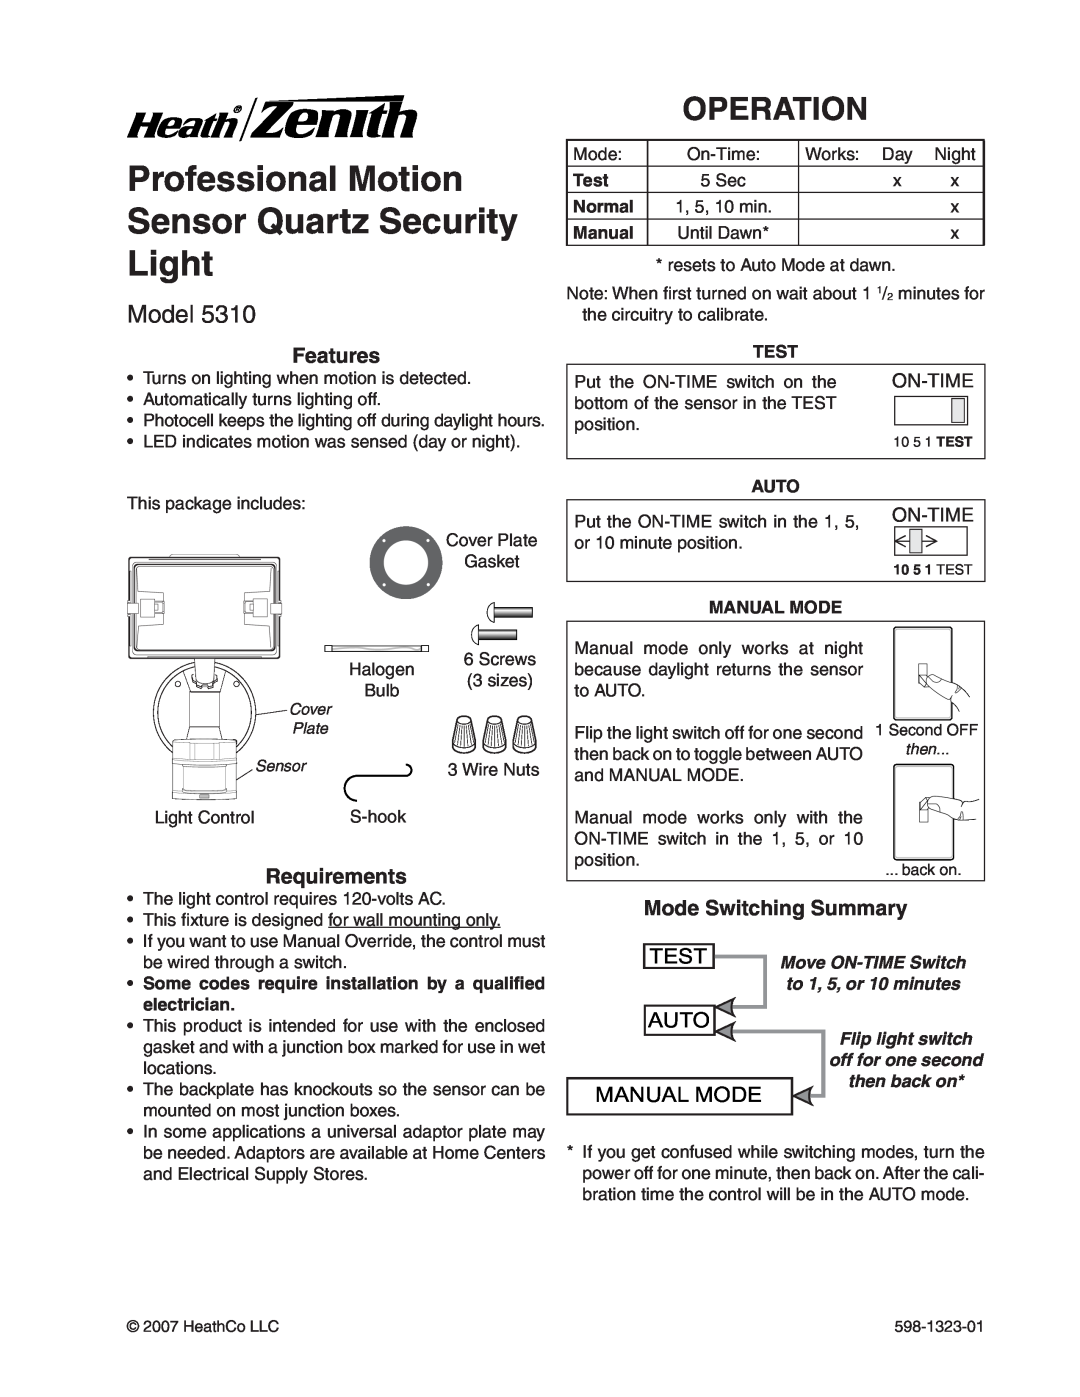 Heath Zenith 5310 manual Operation, Model, Professional Motion Sensor Quartz Security Light, Auto, Manual Mode, On-Time 